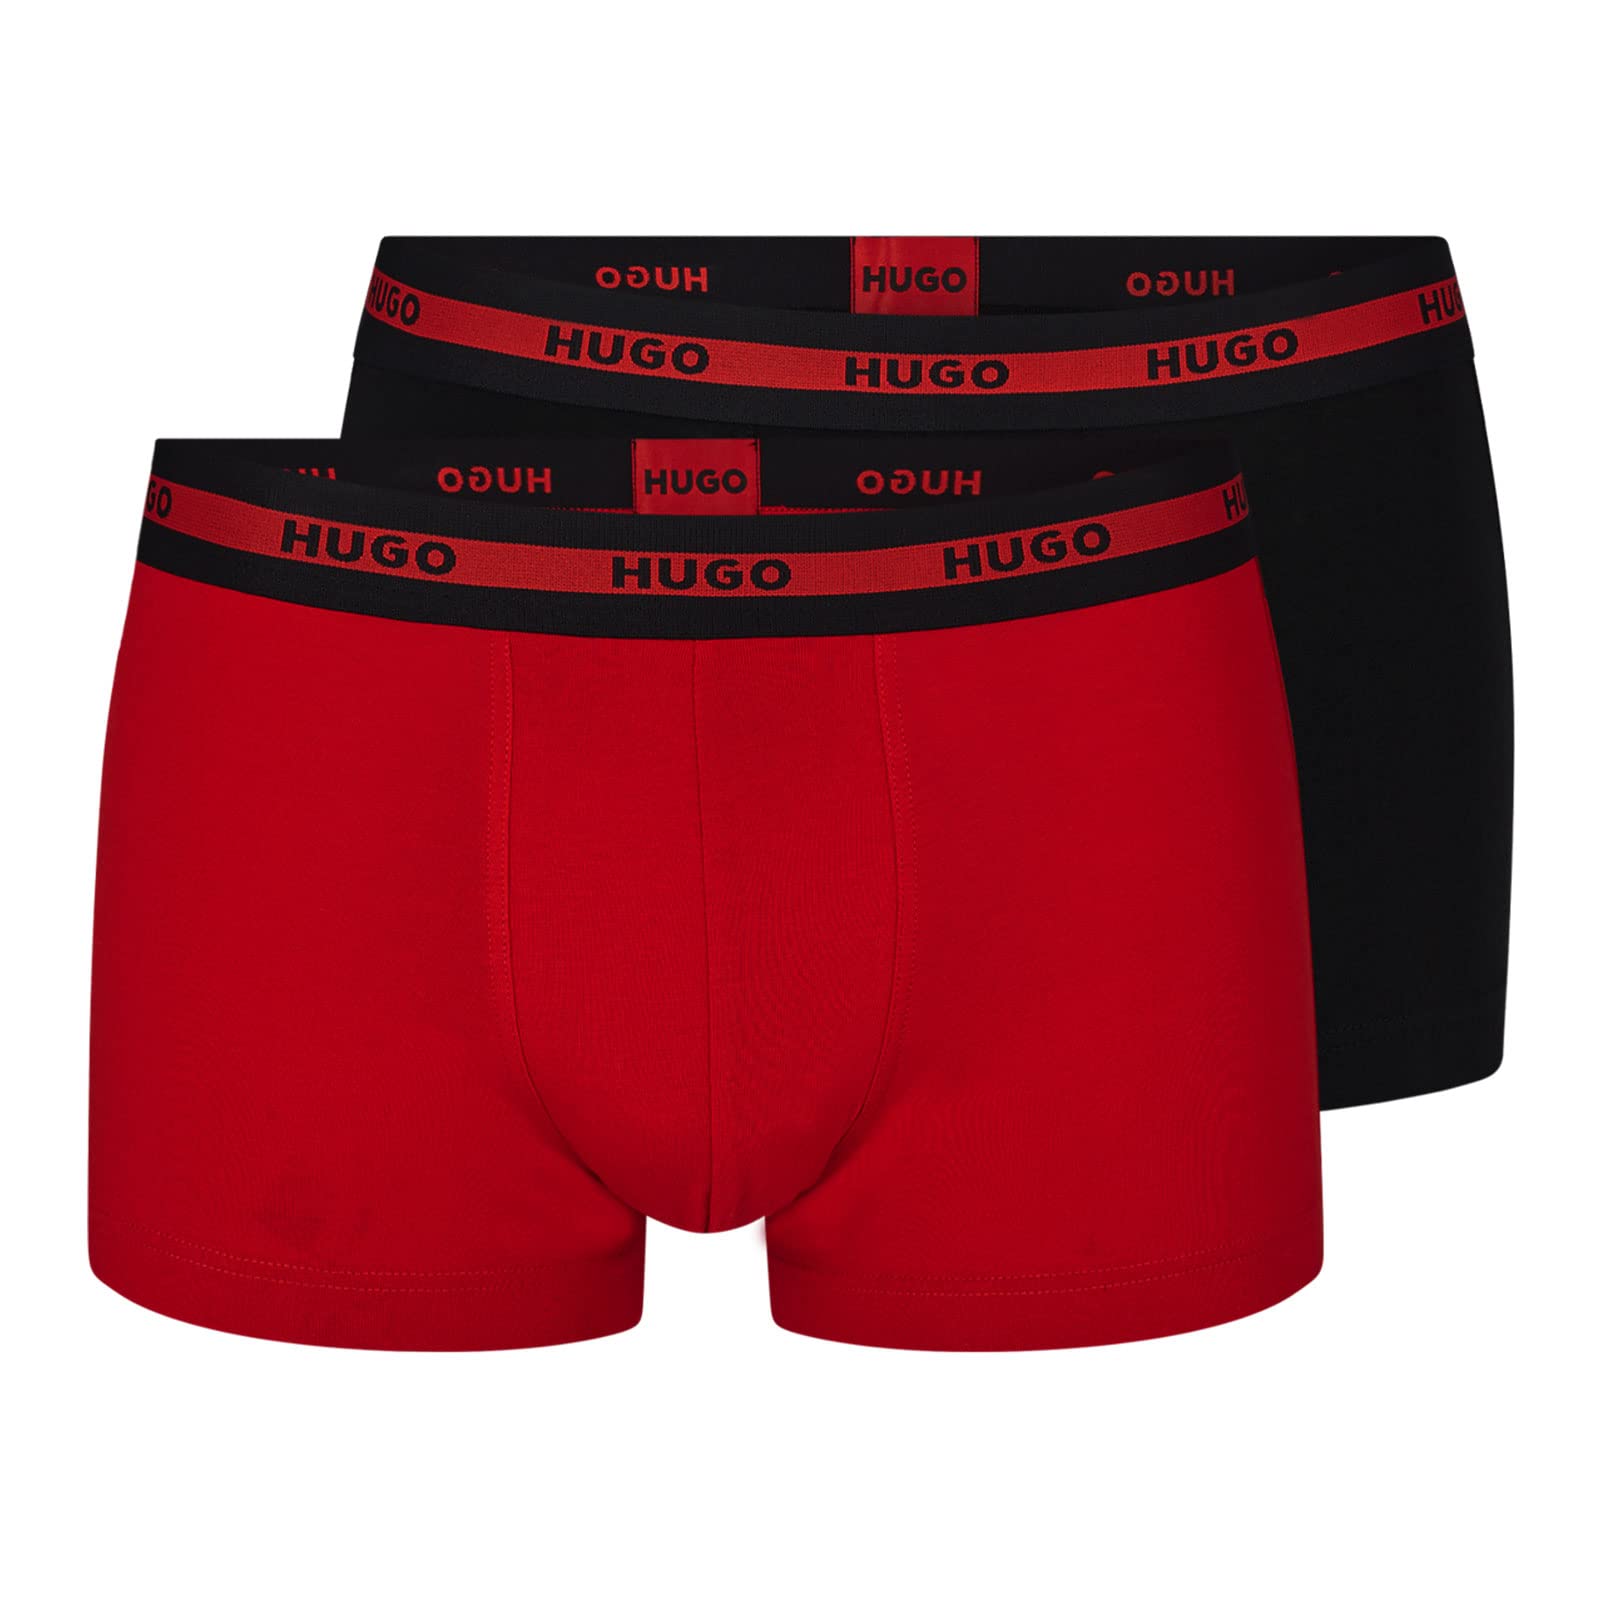 HUGO Herren Boxershorts Boxer Unterhosen Shorts Trunks Twin Pack 2er Pack, Farbe:Mehrfarbig, Größe:S, Artikel:-622 Black/red